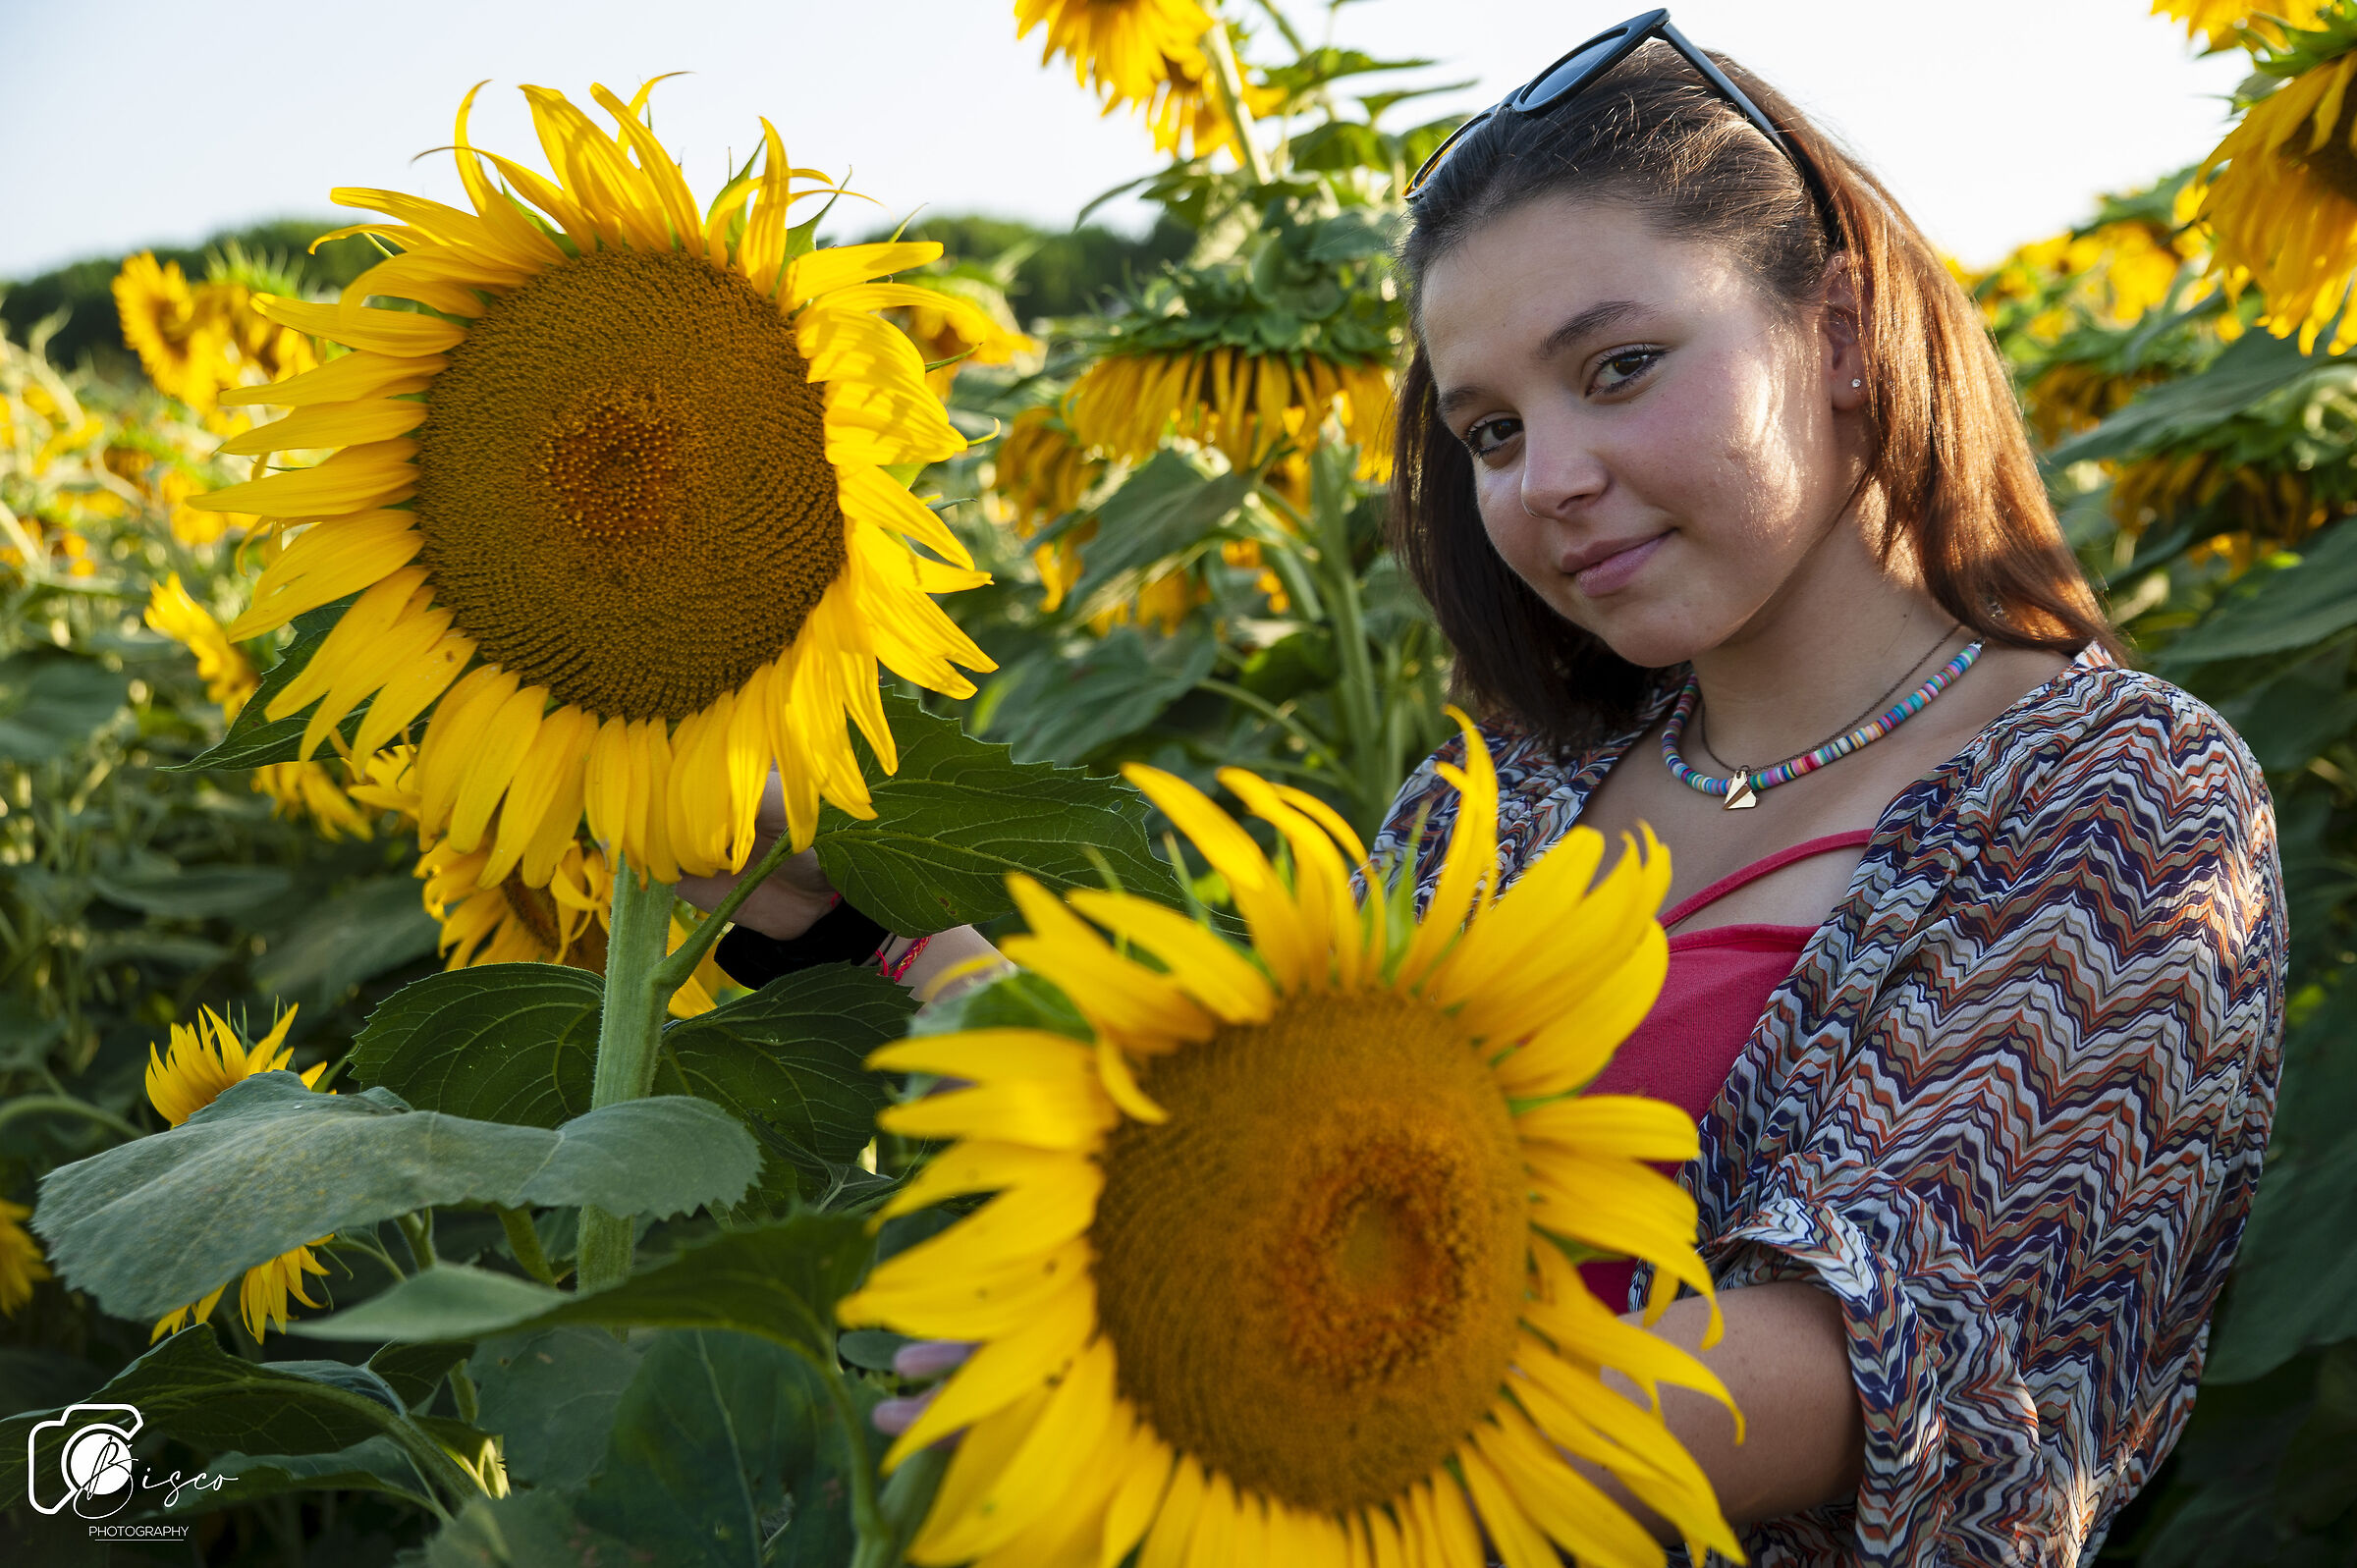 Rebecca among the sunflowers...